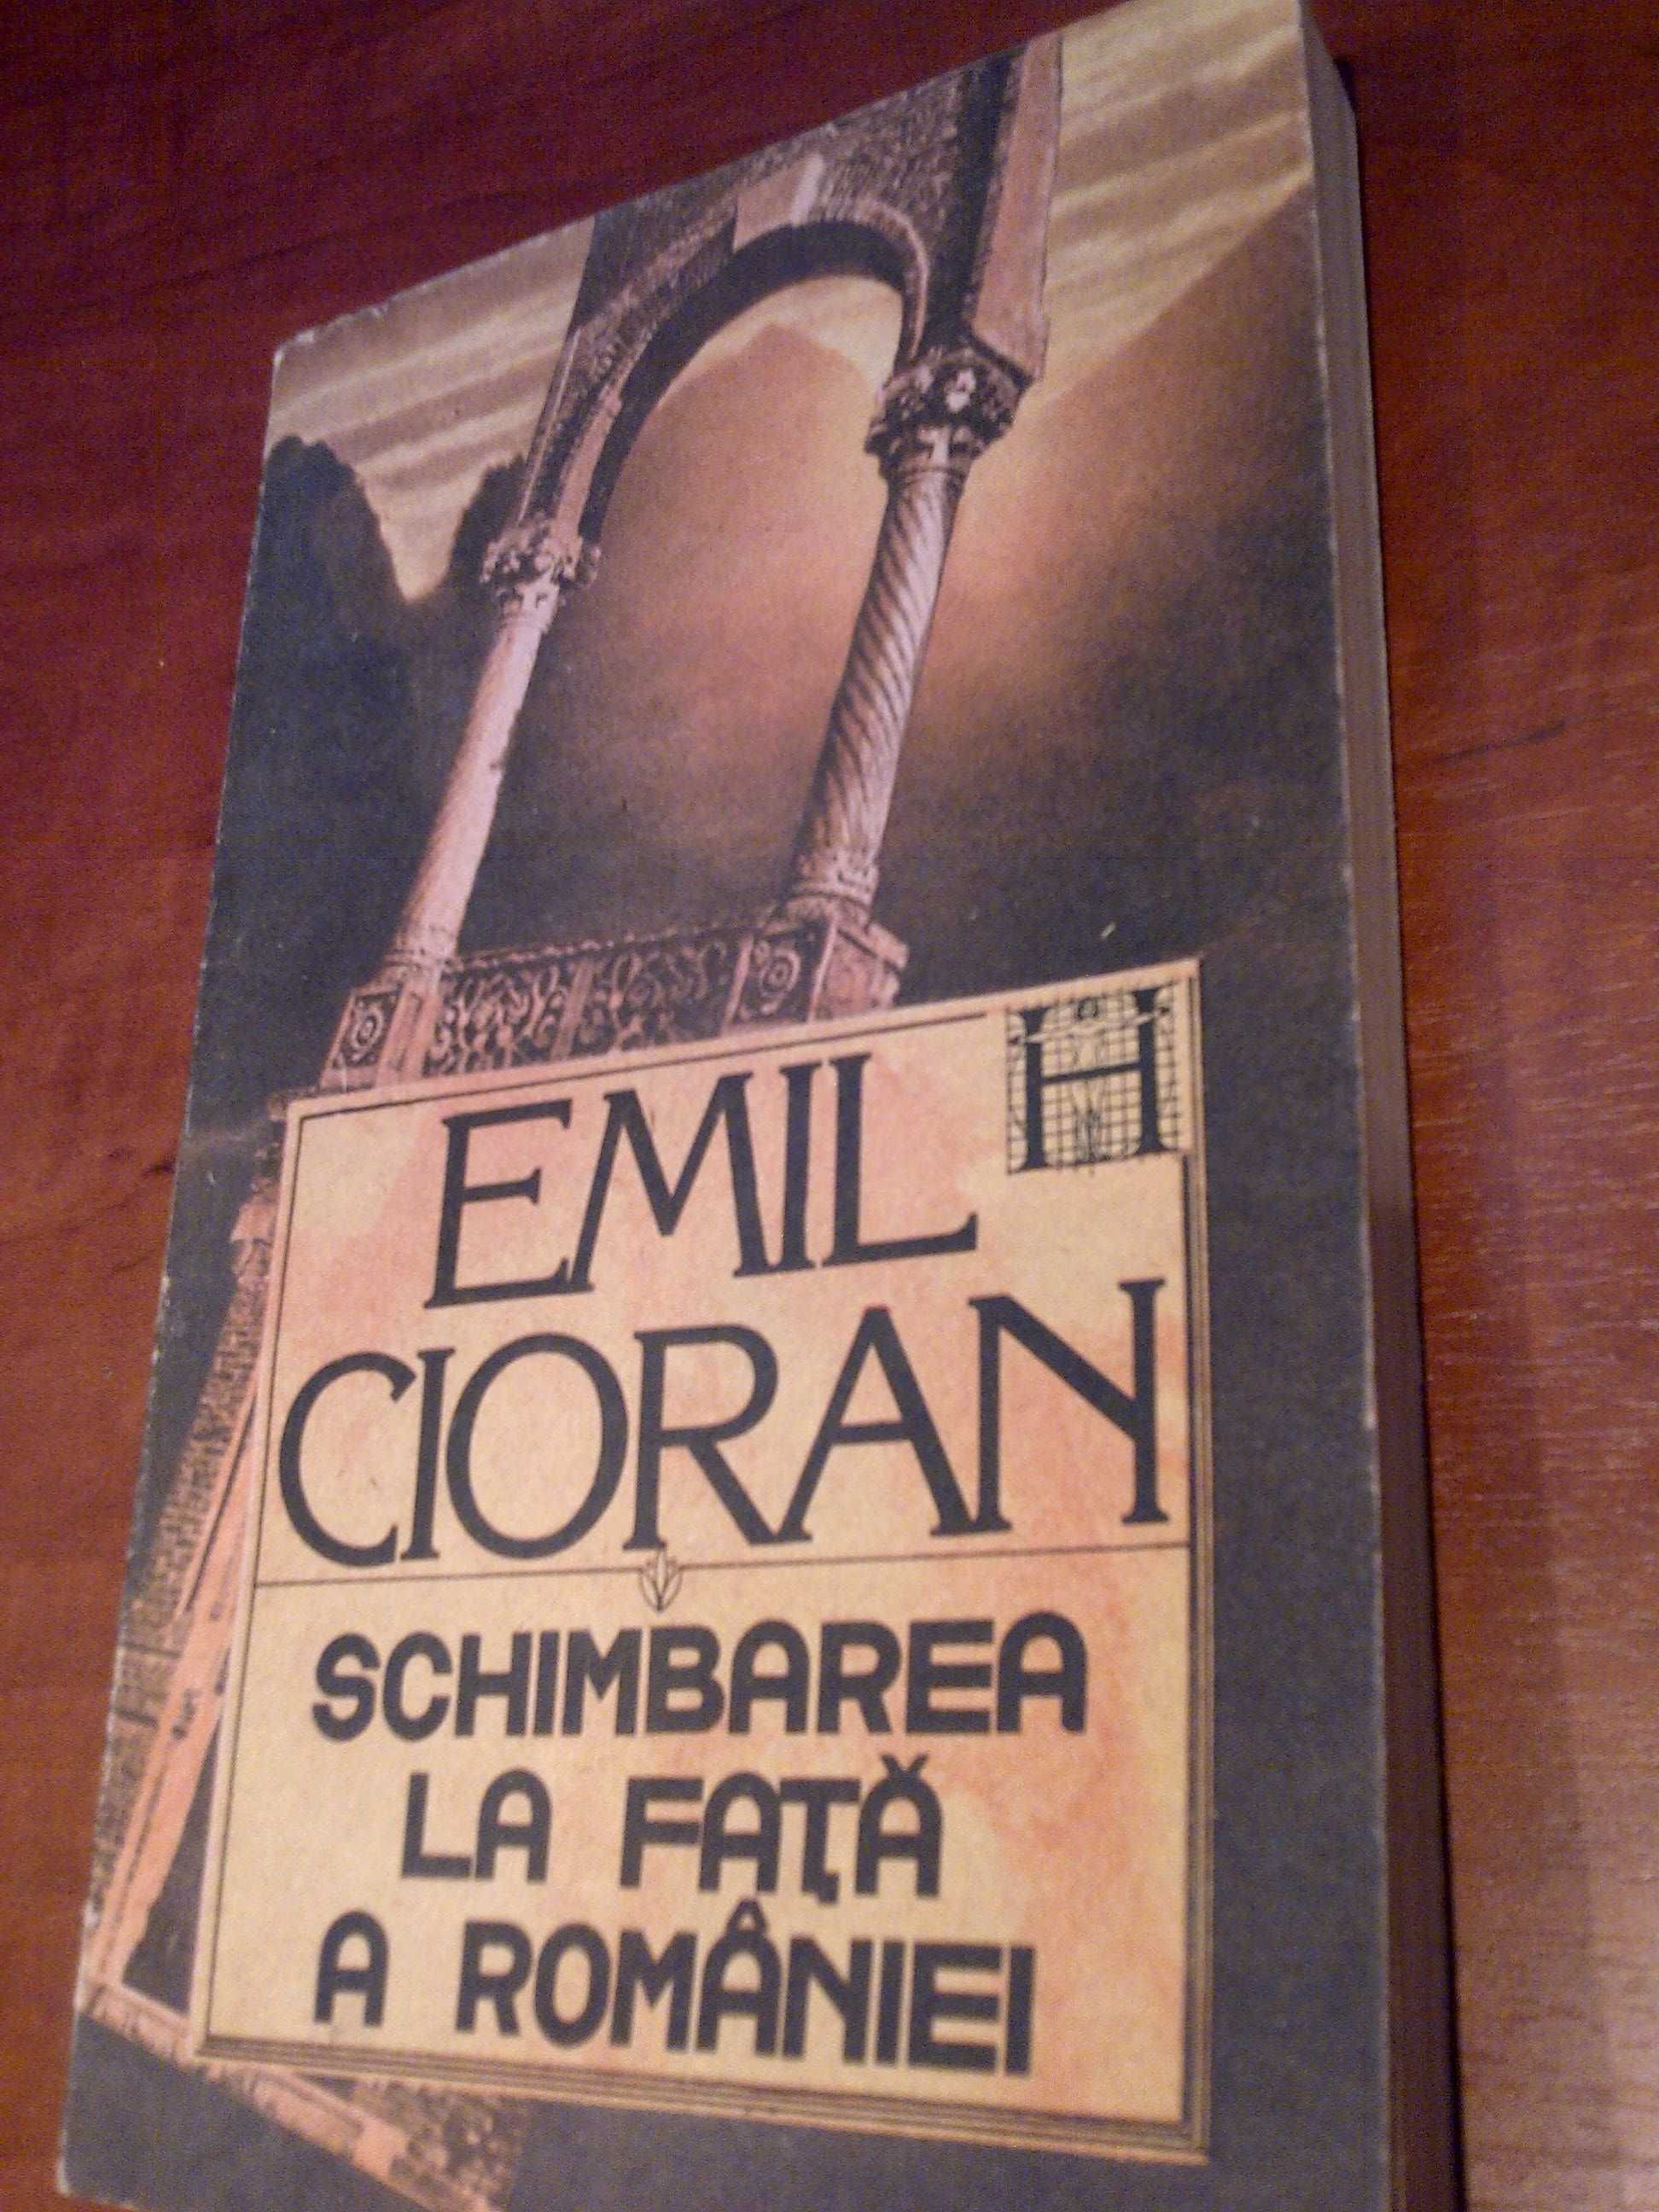 Emil Cioran "Schimbarea la fata a Romaniei"